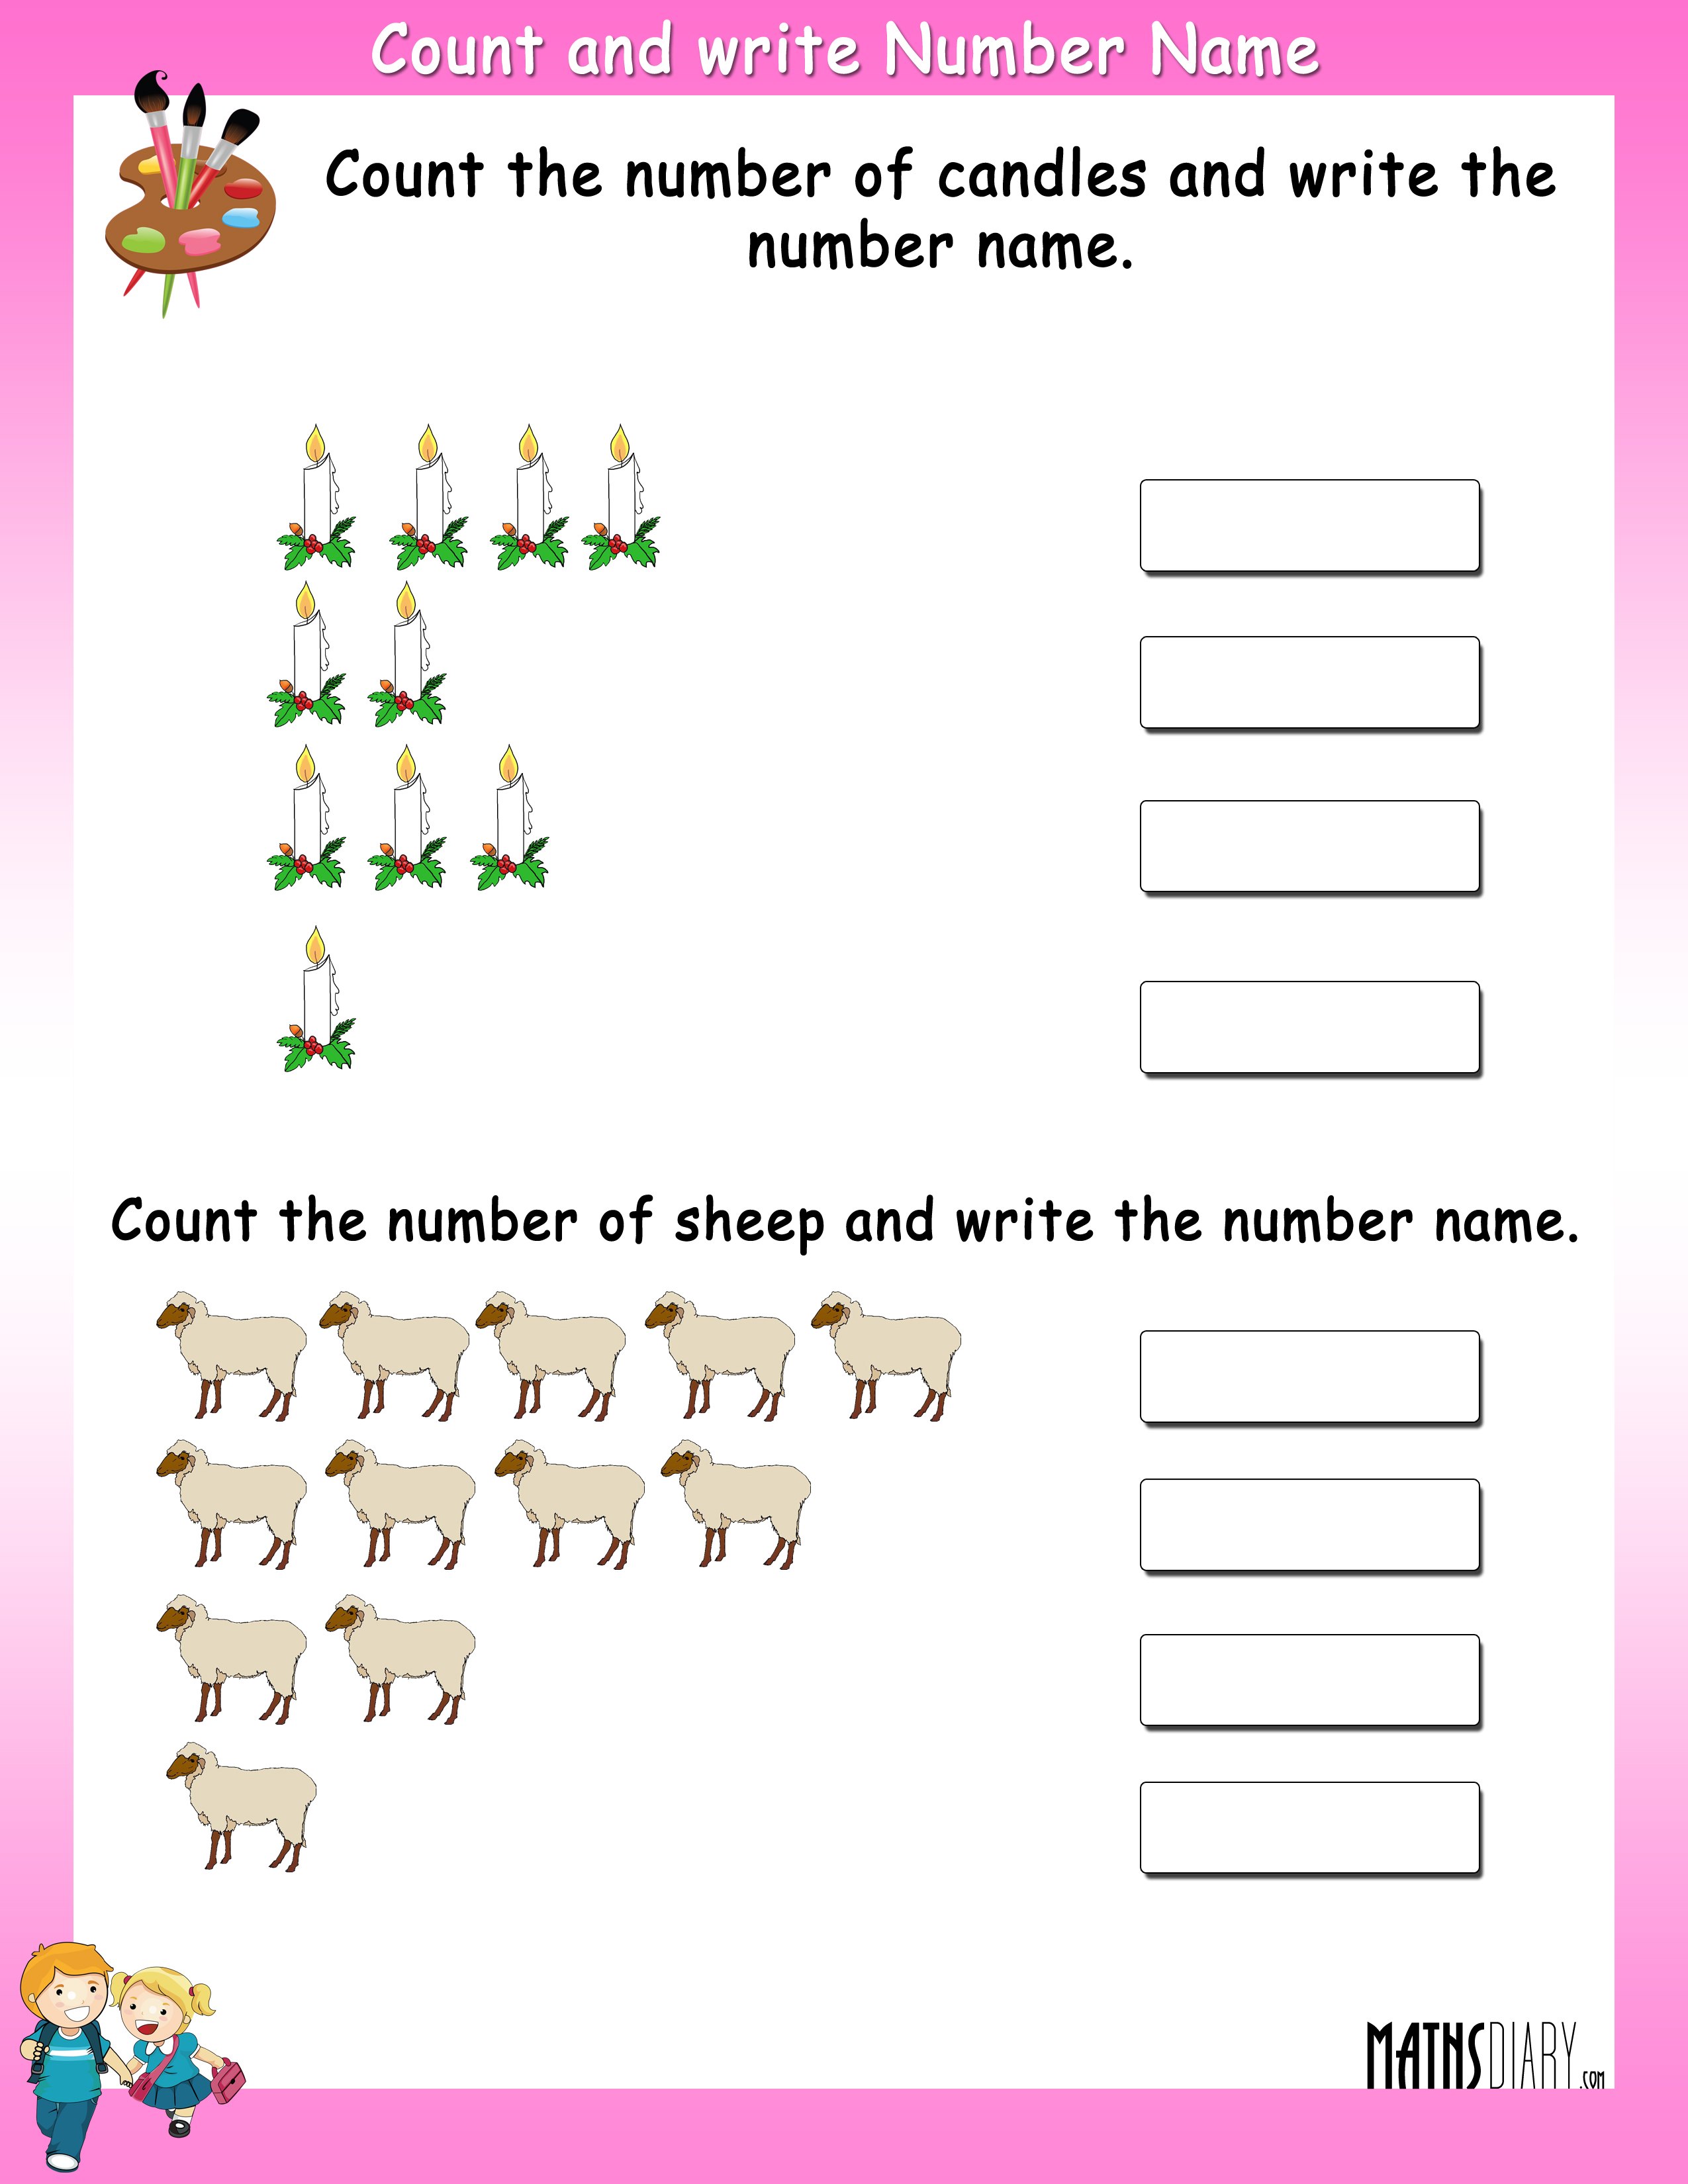 naming-numbers-grade-1-math-worksheets-page-2-matching-number-name-to-numbers-1-10-worksheet